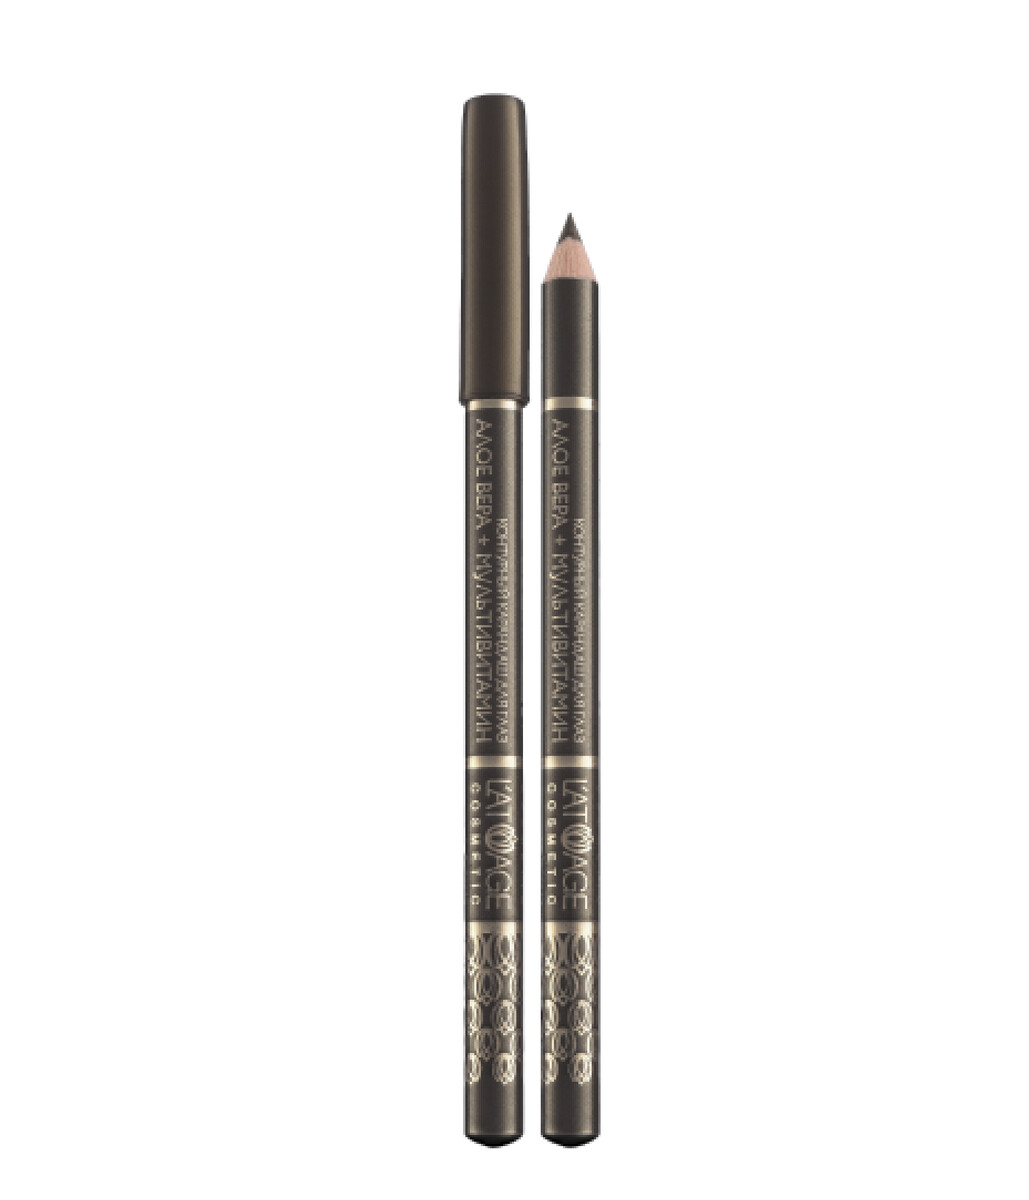 Контурный карандаш для глаз latuage cosmetic №41 (шоколадный) контурный карандаш для бровей latuage cosmetic 04 блонд